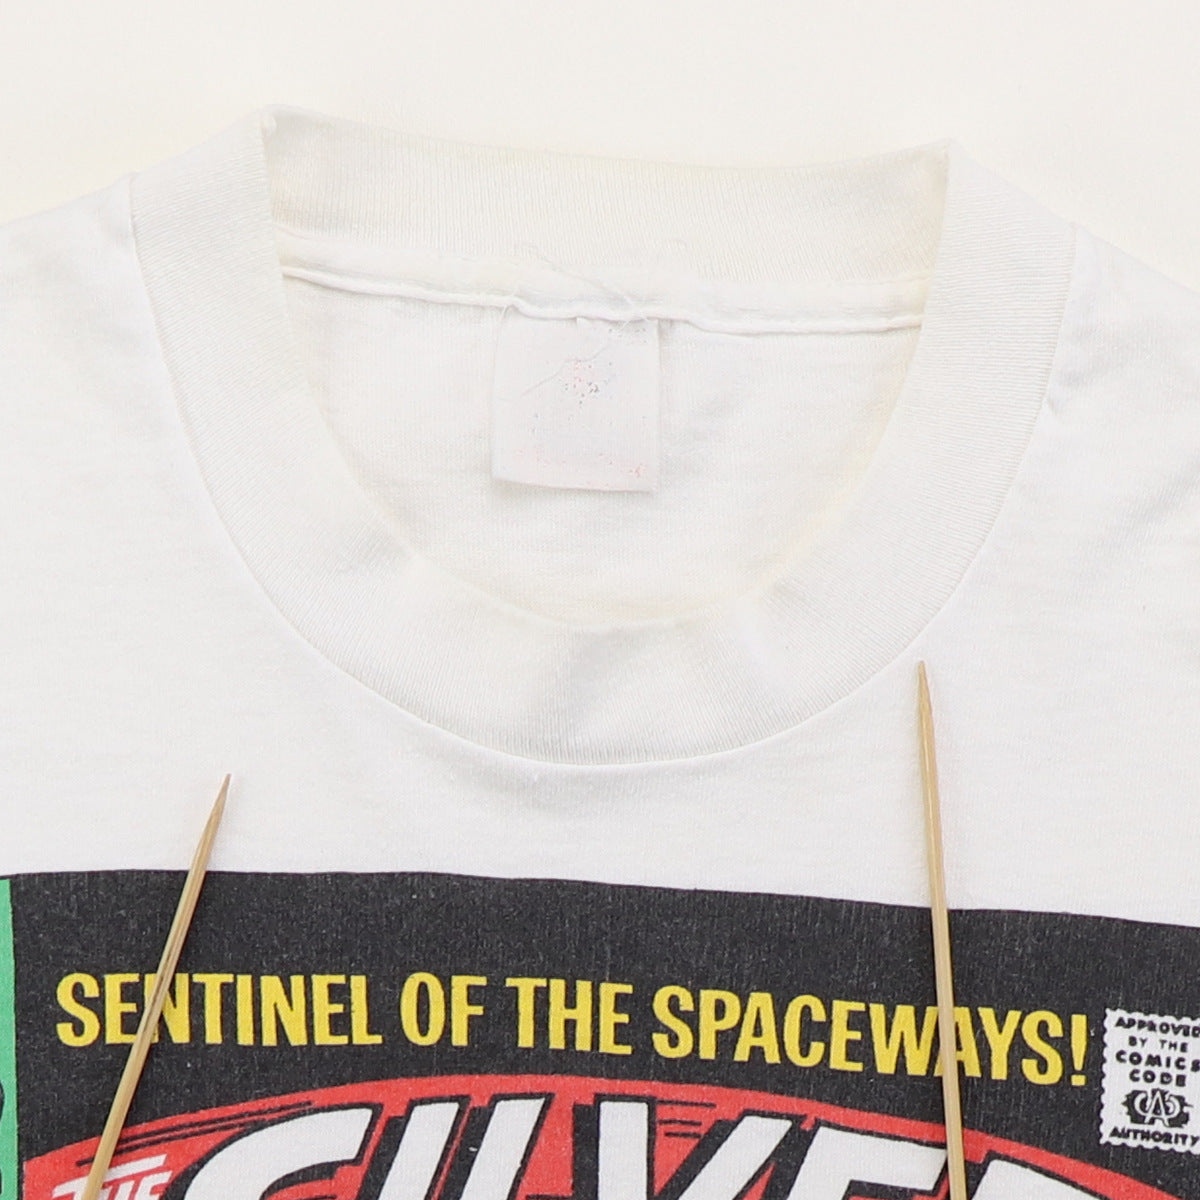 1988 Silver Surfer Marvel Comics Shirt